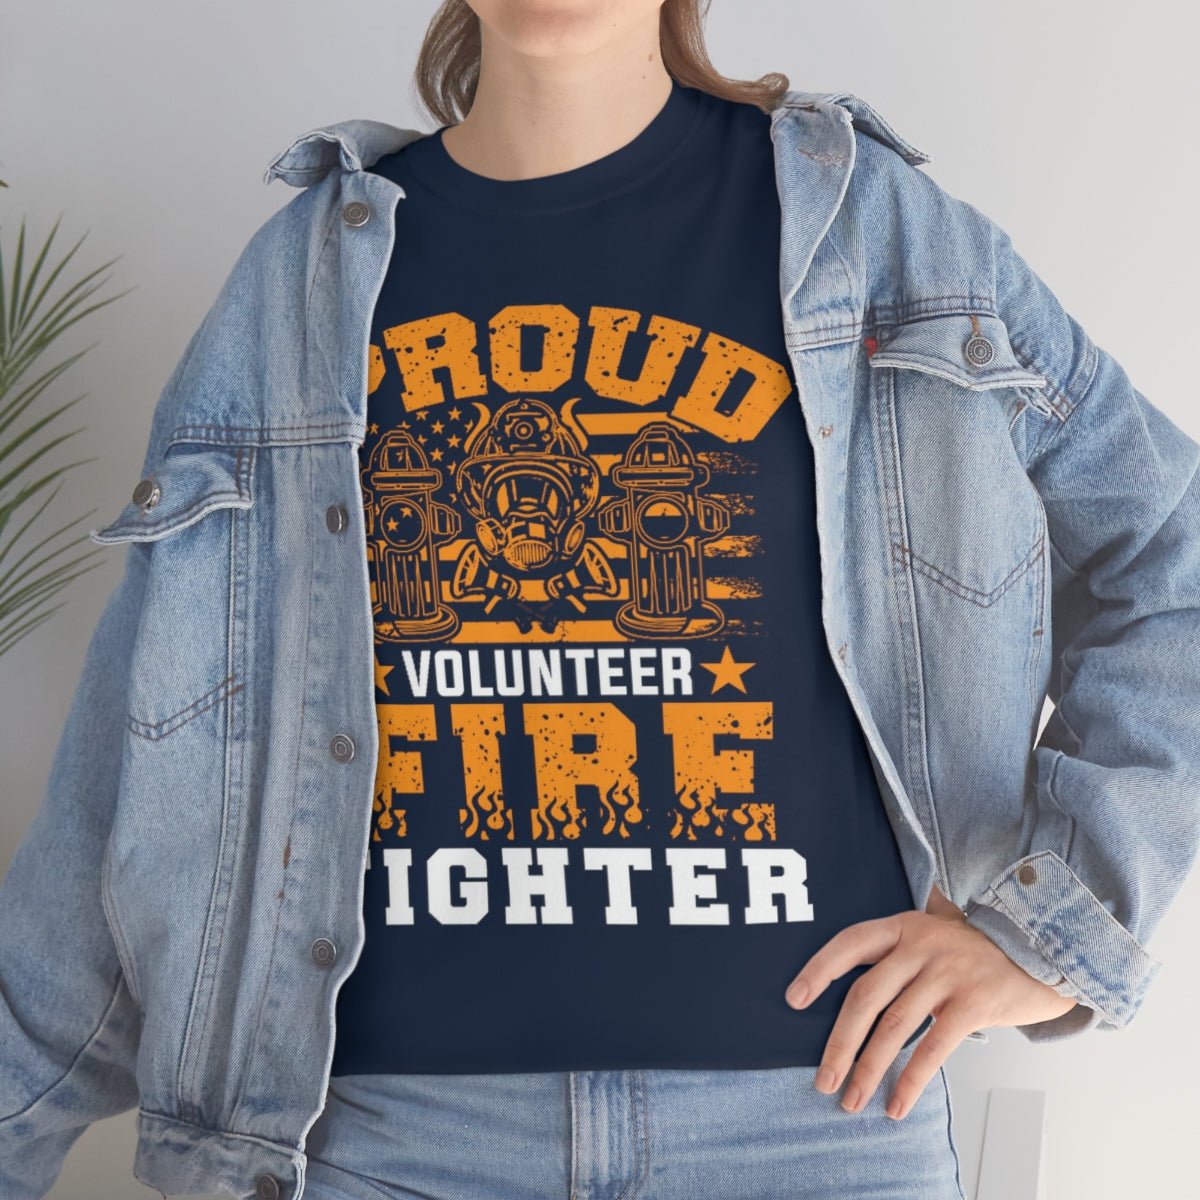 Proud Volunteer Firefighter Heavy Cotton Tee - Salty Medic Clothing Co.